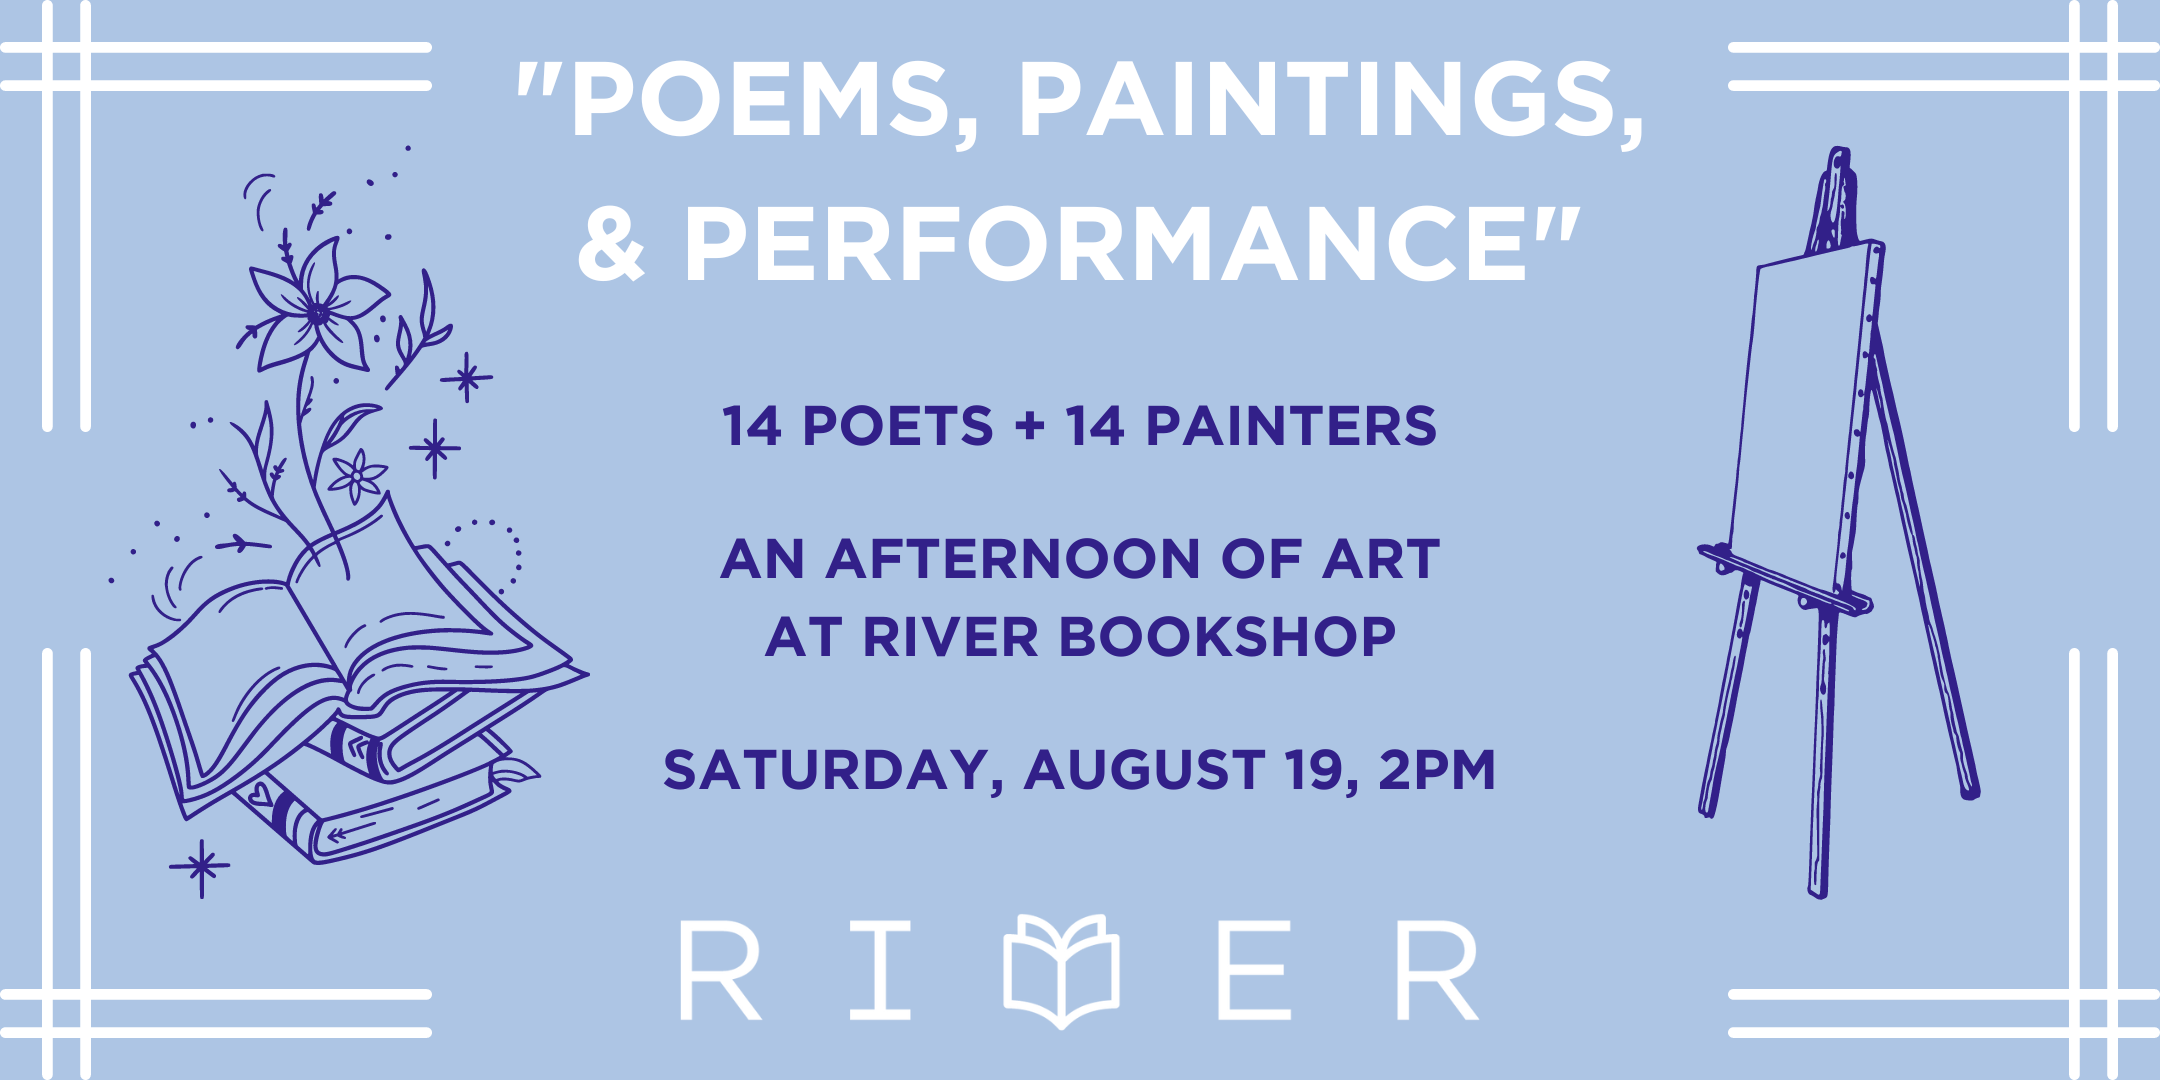 Poems, Paintings, & Performance: Saturday, August 19